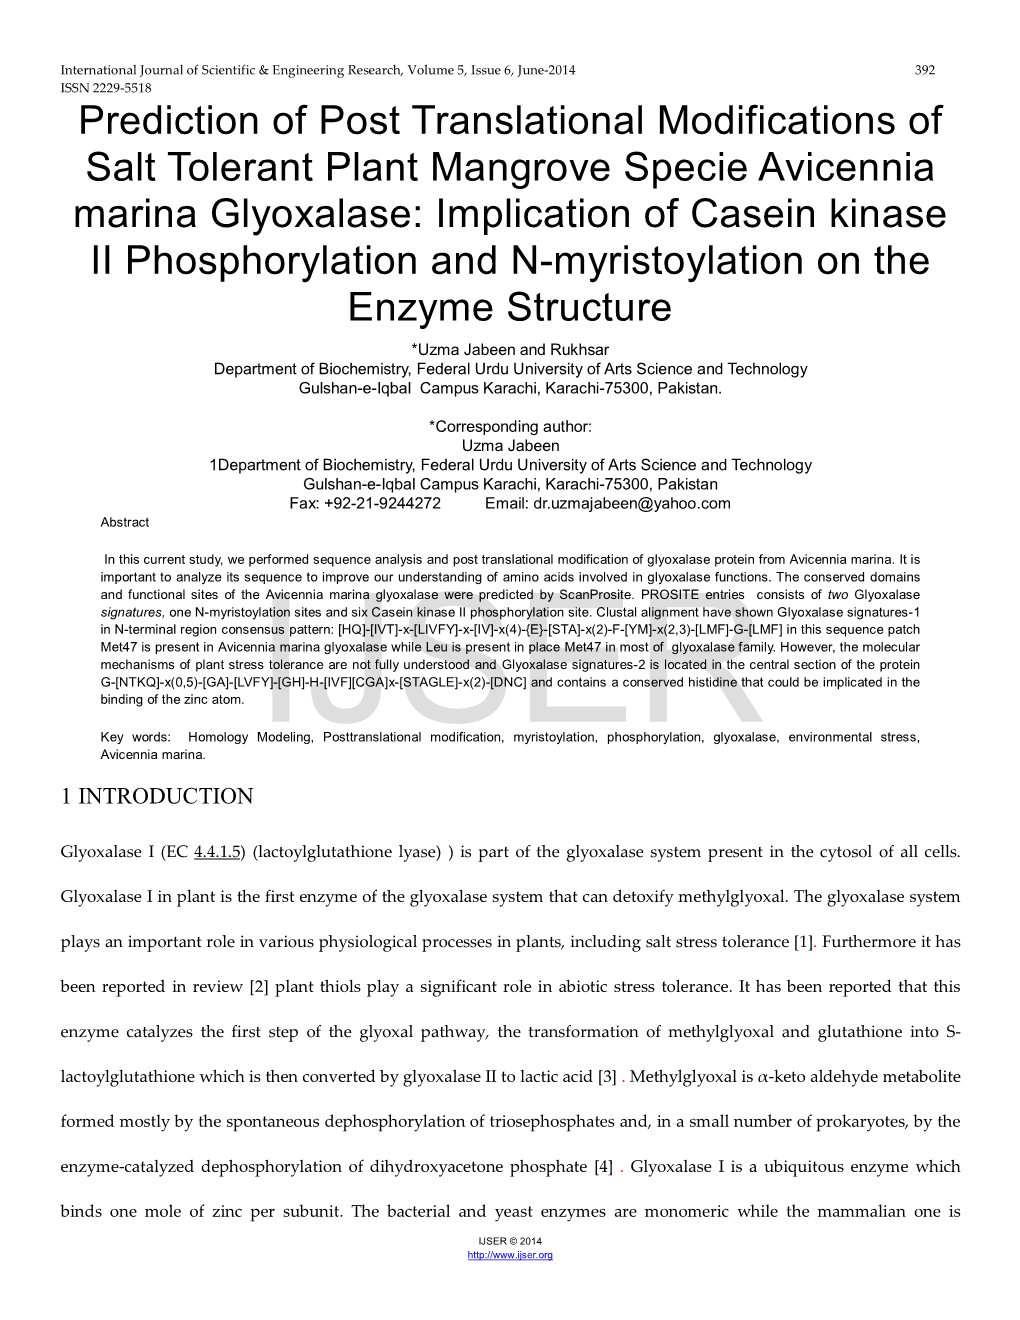 Prediction of Post Translational Modifications of Salt Tolerant Plant Mangrove Specie Avicennia Marina Glyoxalase